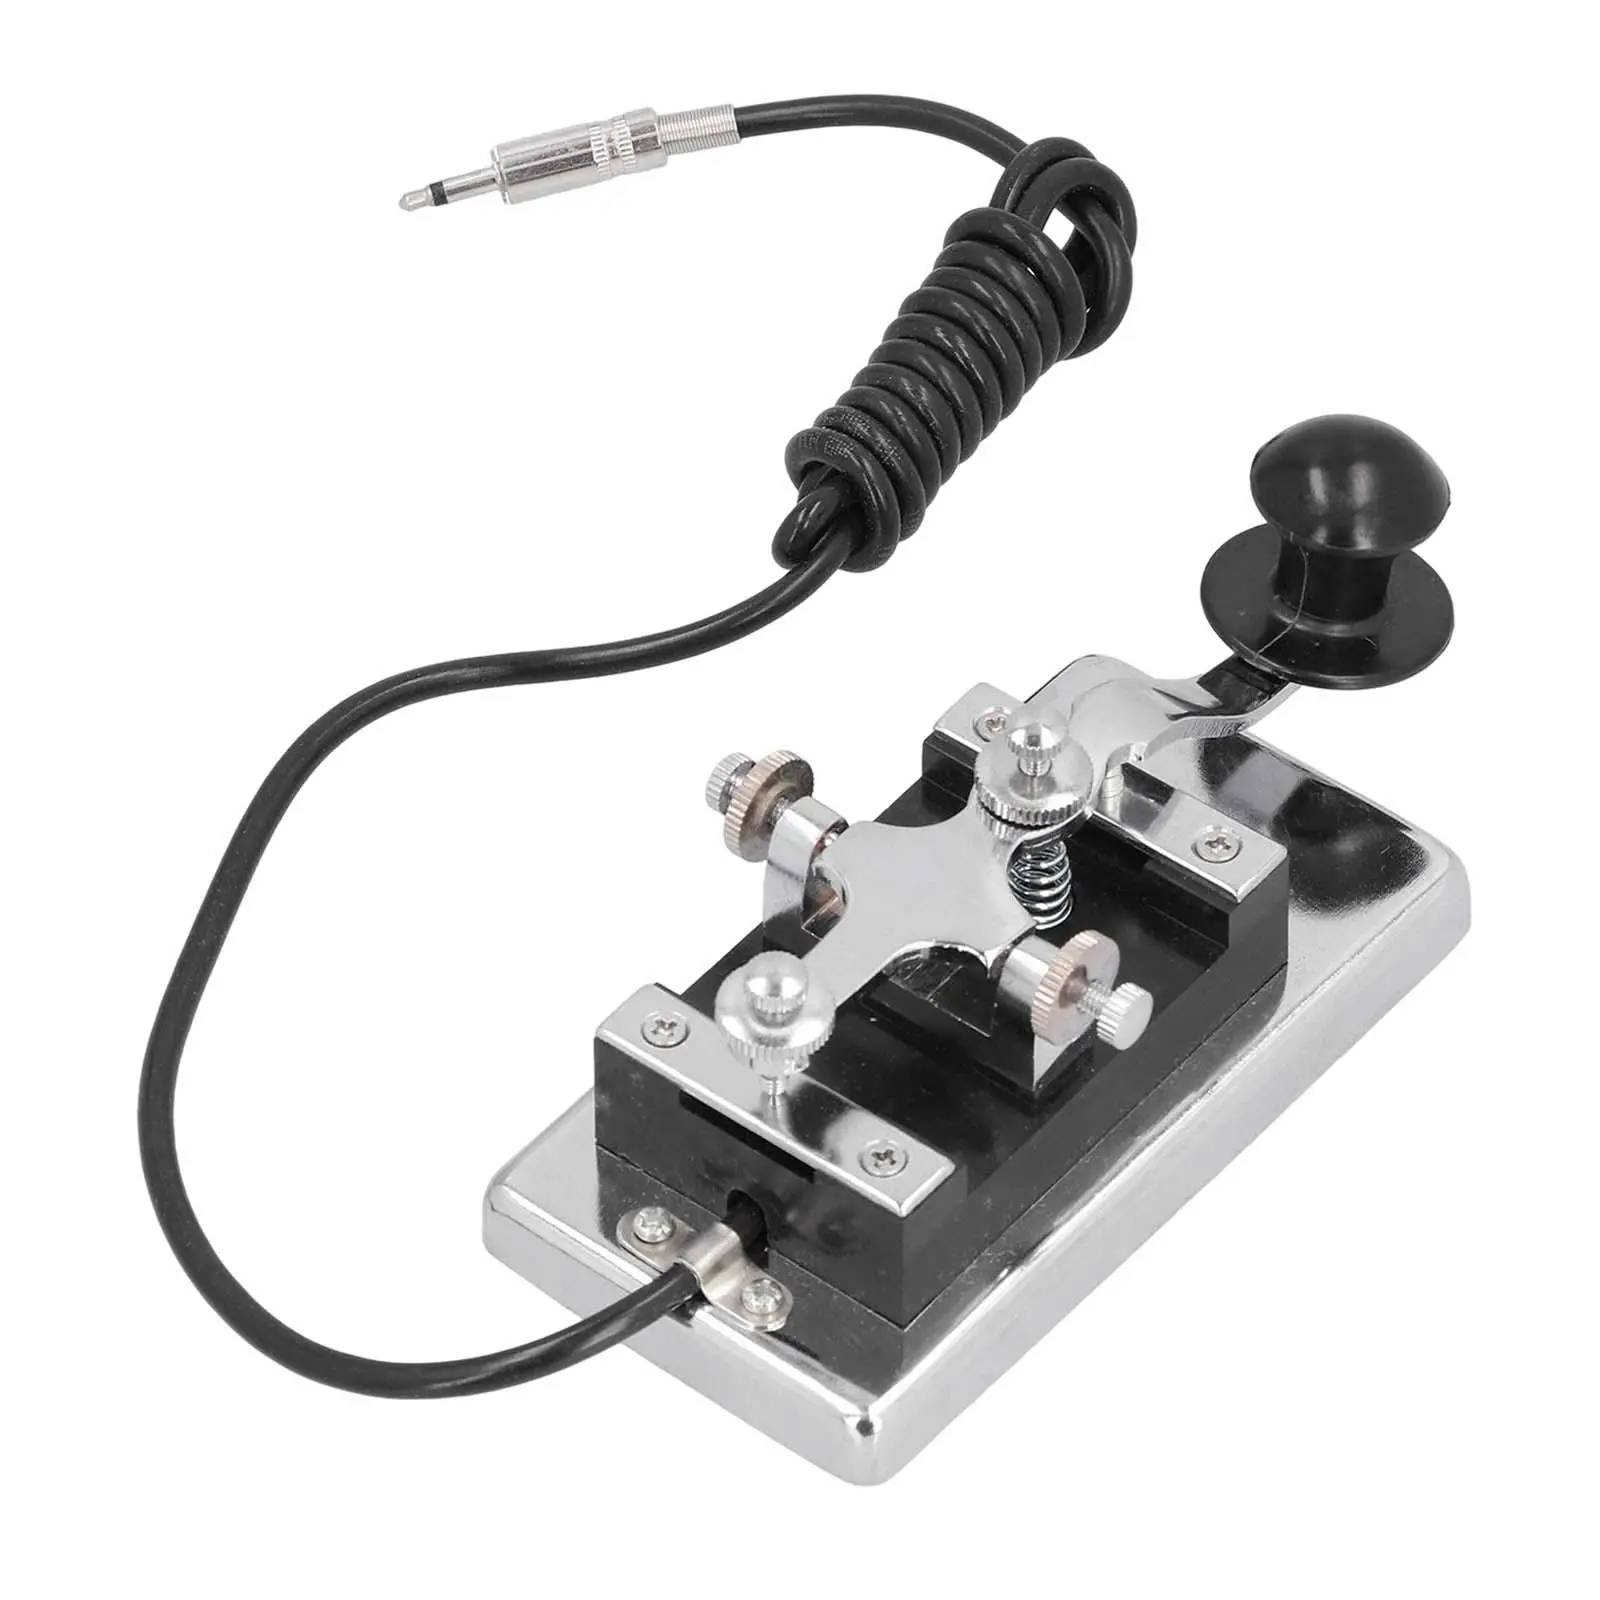 Telegraph Key Portable CW Morse Practice Key Straight Key for Radio Amateur Exerciser